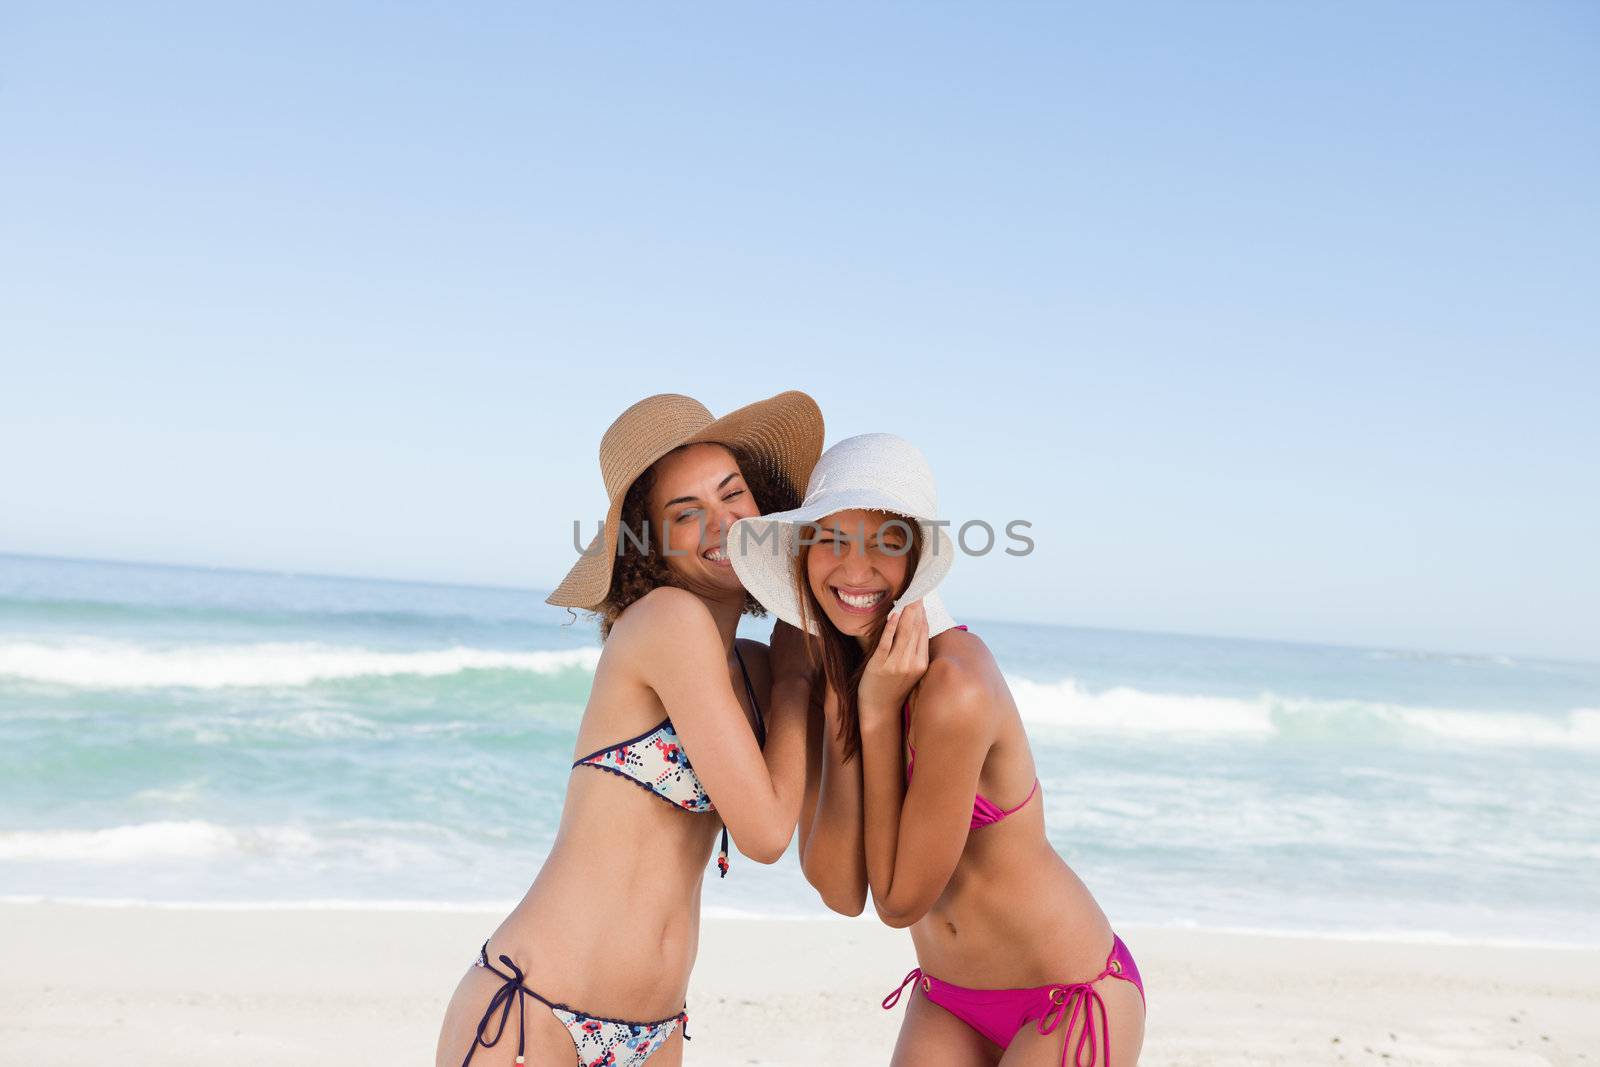 Smiling teenage girls having fun on the beach by Wavebreakmedia